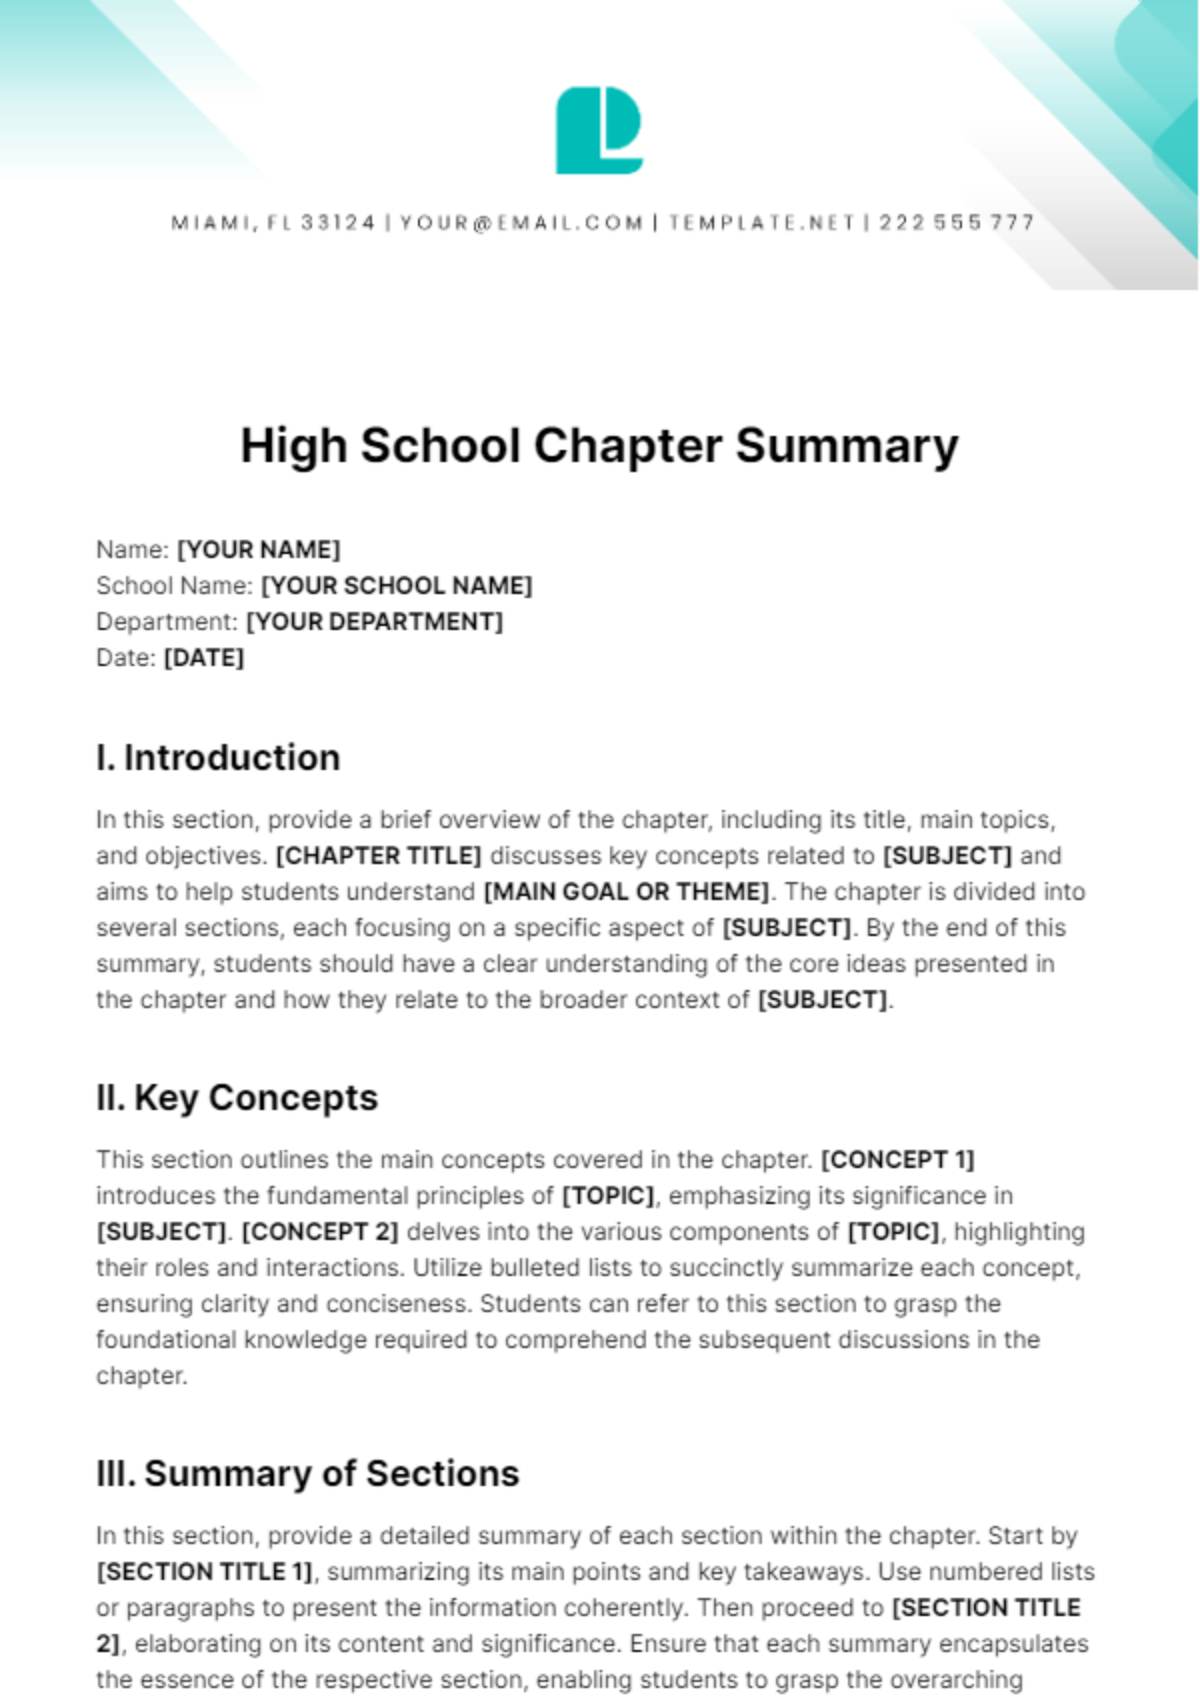 High School Chapter Summary Template